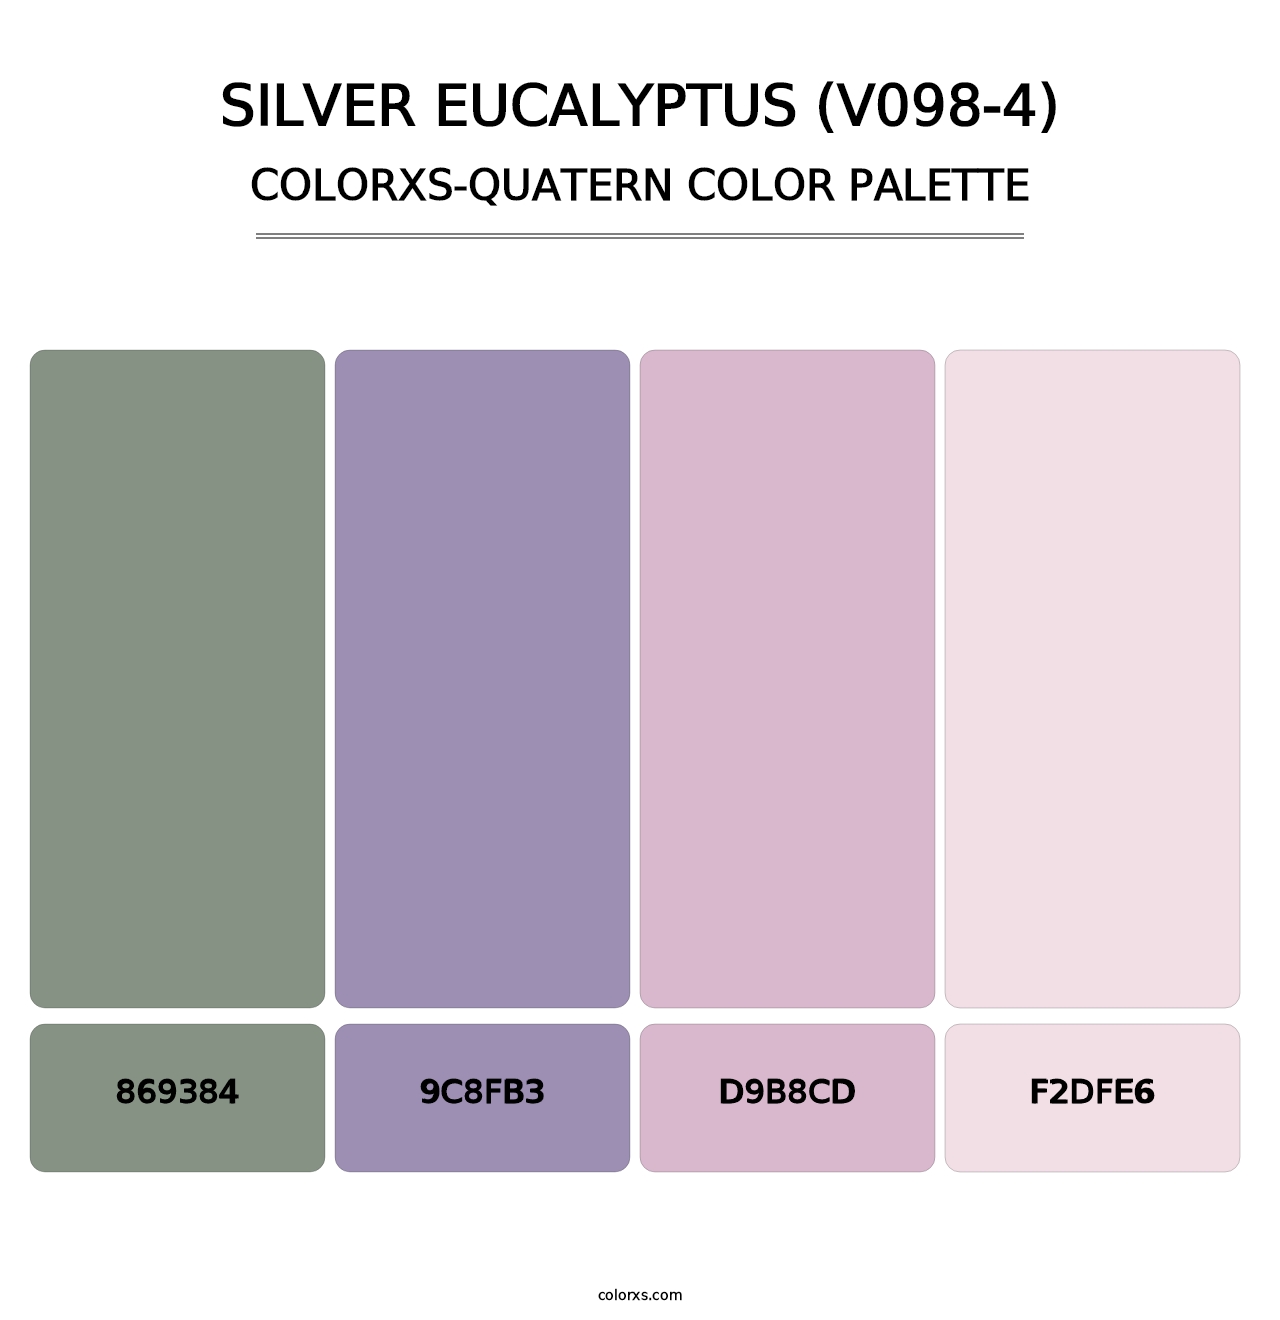 Silver Eucalyptus (V098-4) - Colorxs Quatern Palette